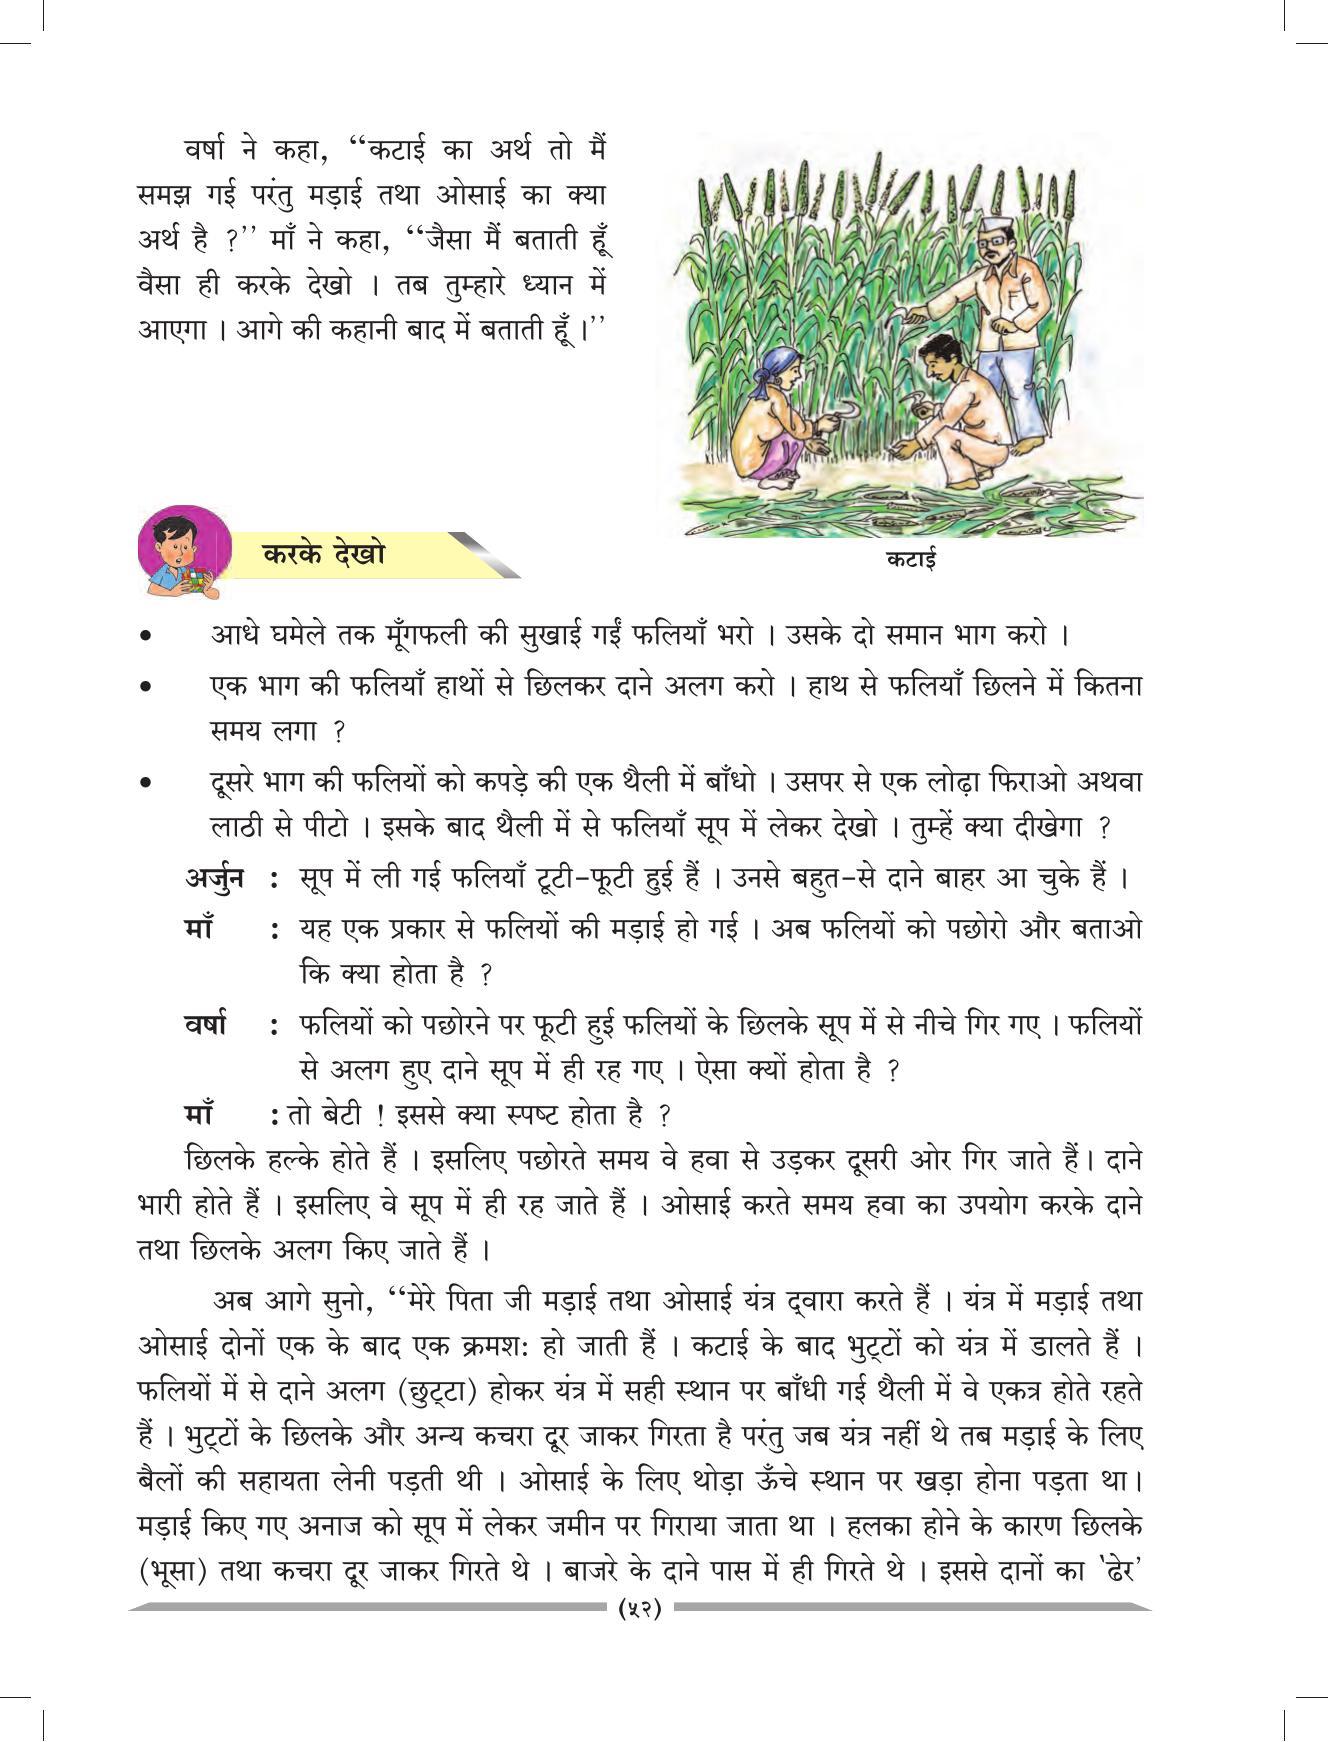 Maharashtra Board Class 4 EVS 1 (Hindi Medium) Textbook - Page 62